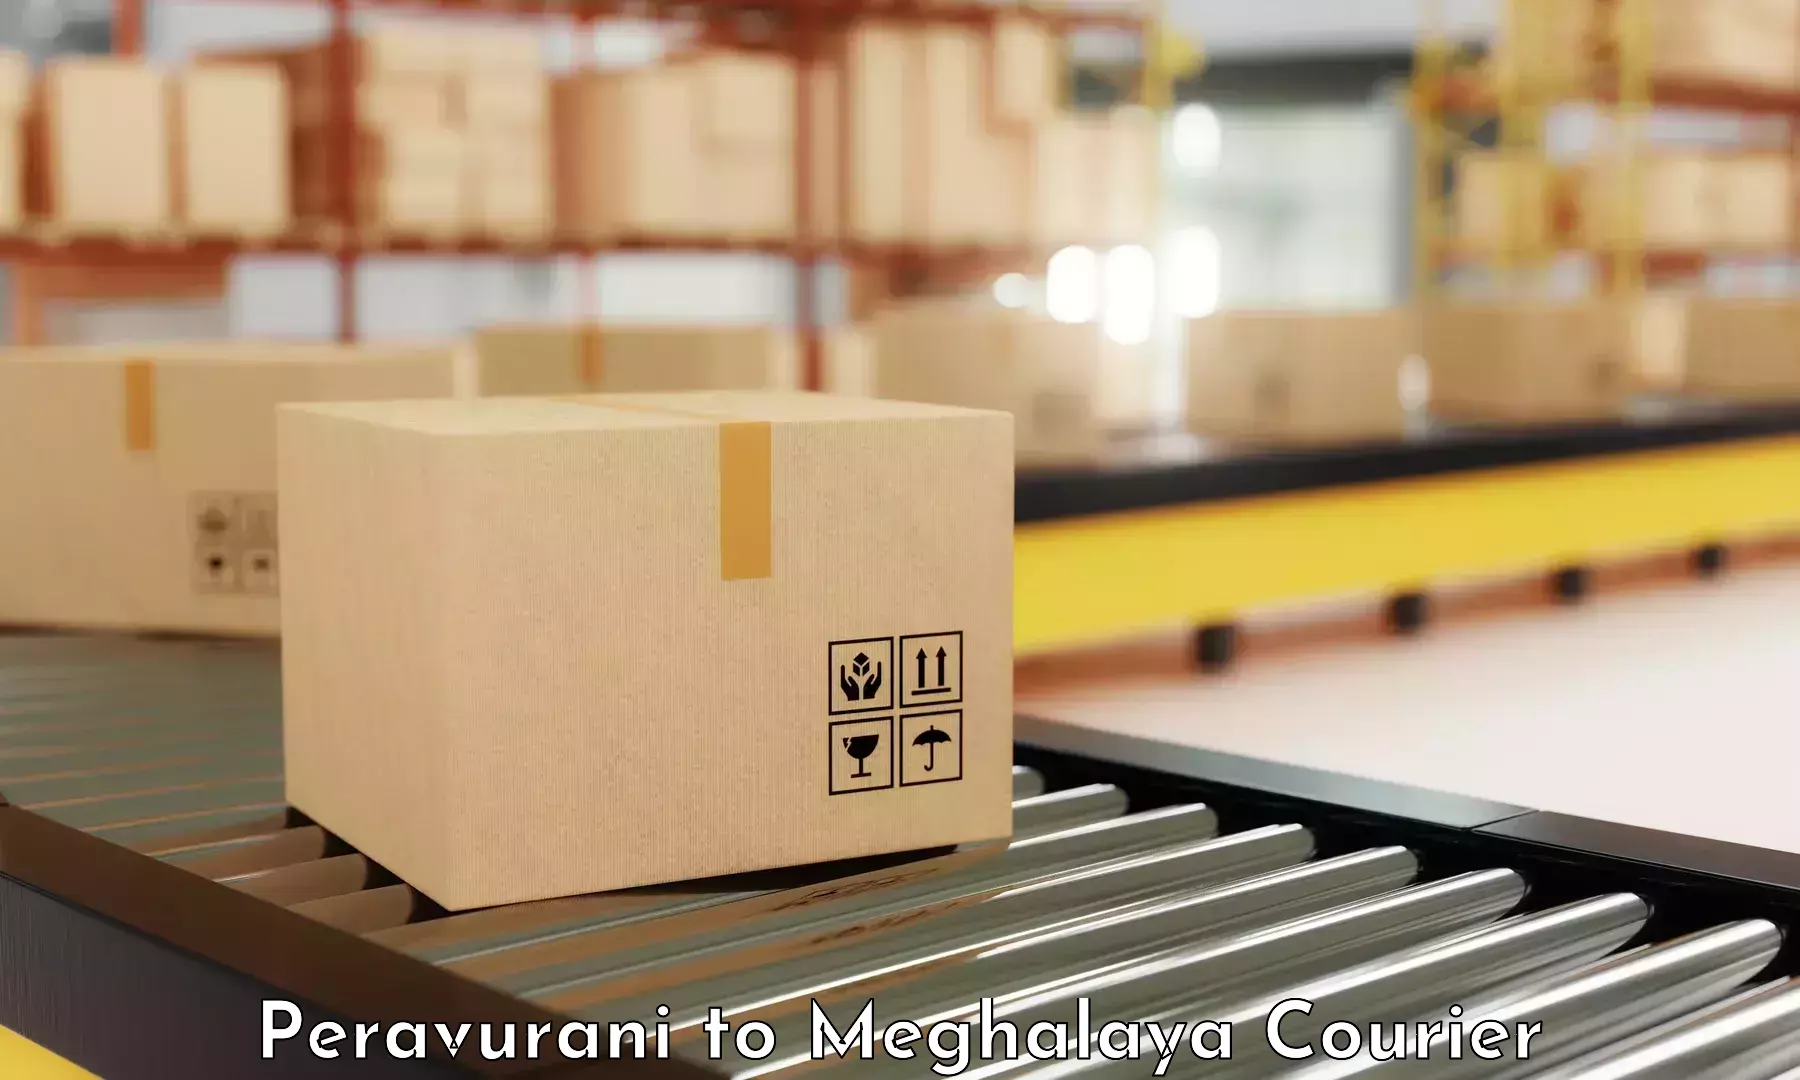 Courier service innovation Peravurani to Meghalaya